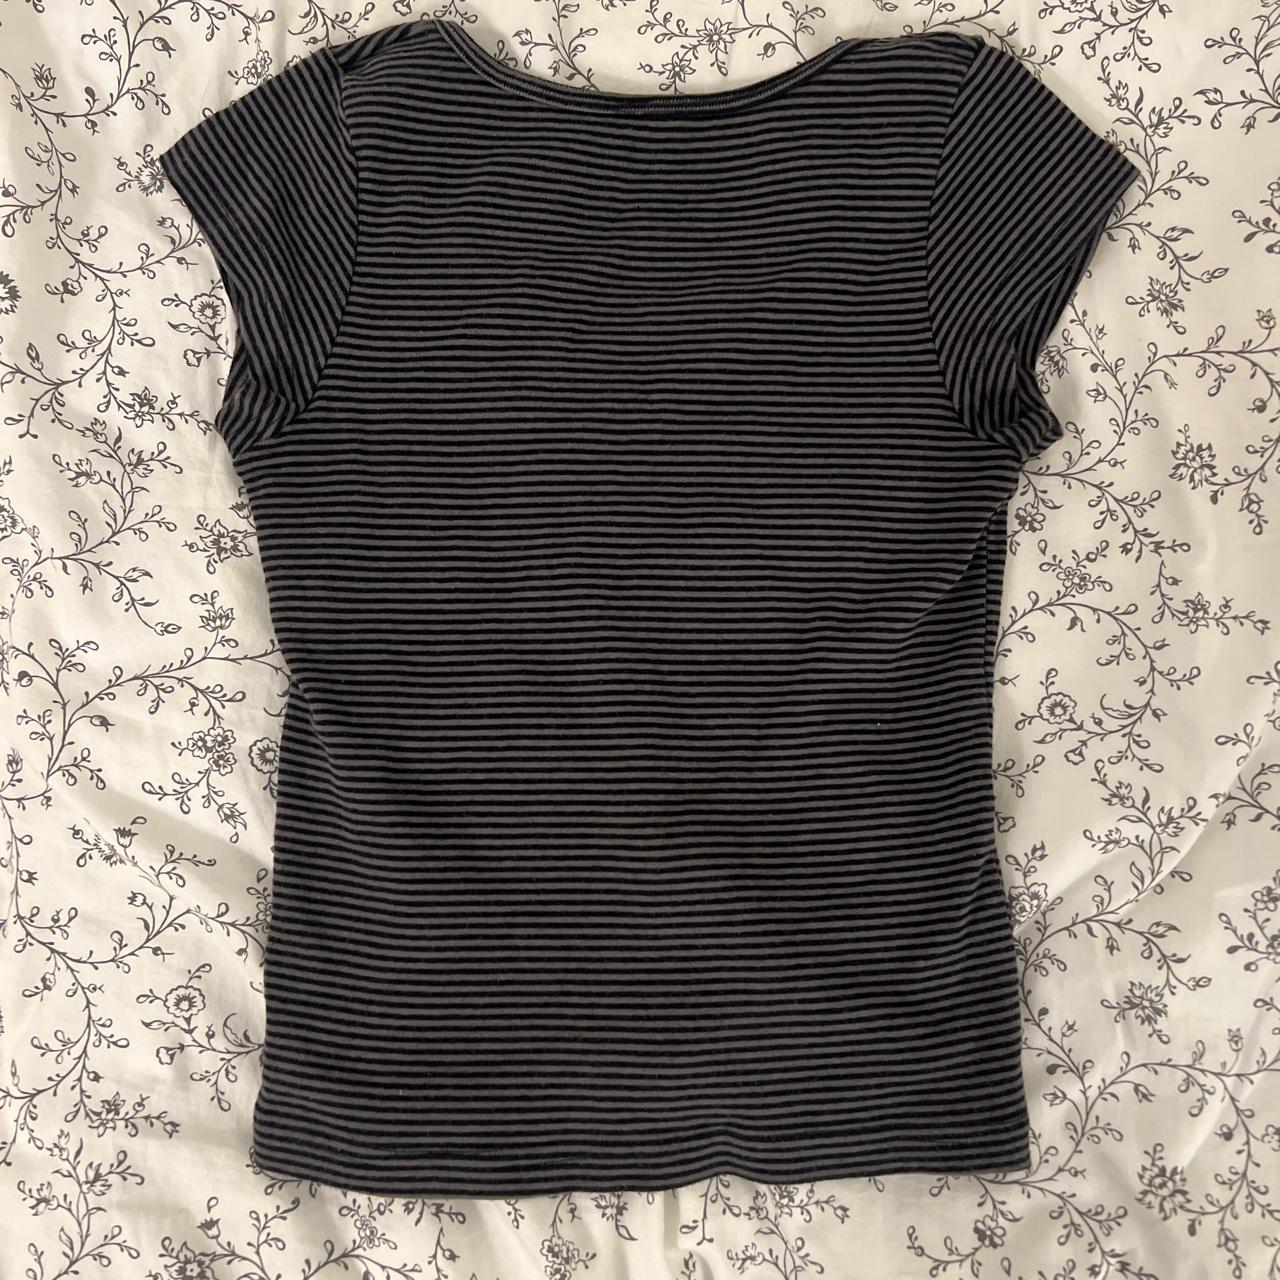 Brandy Melville Women's Black and Grey Shirt (2)